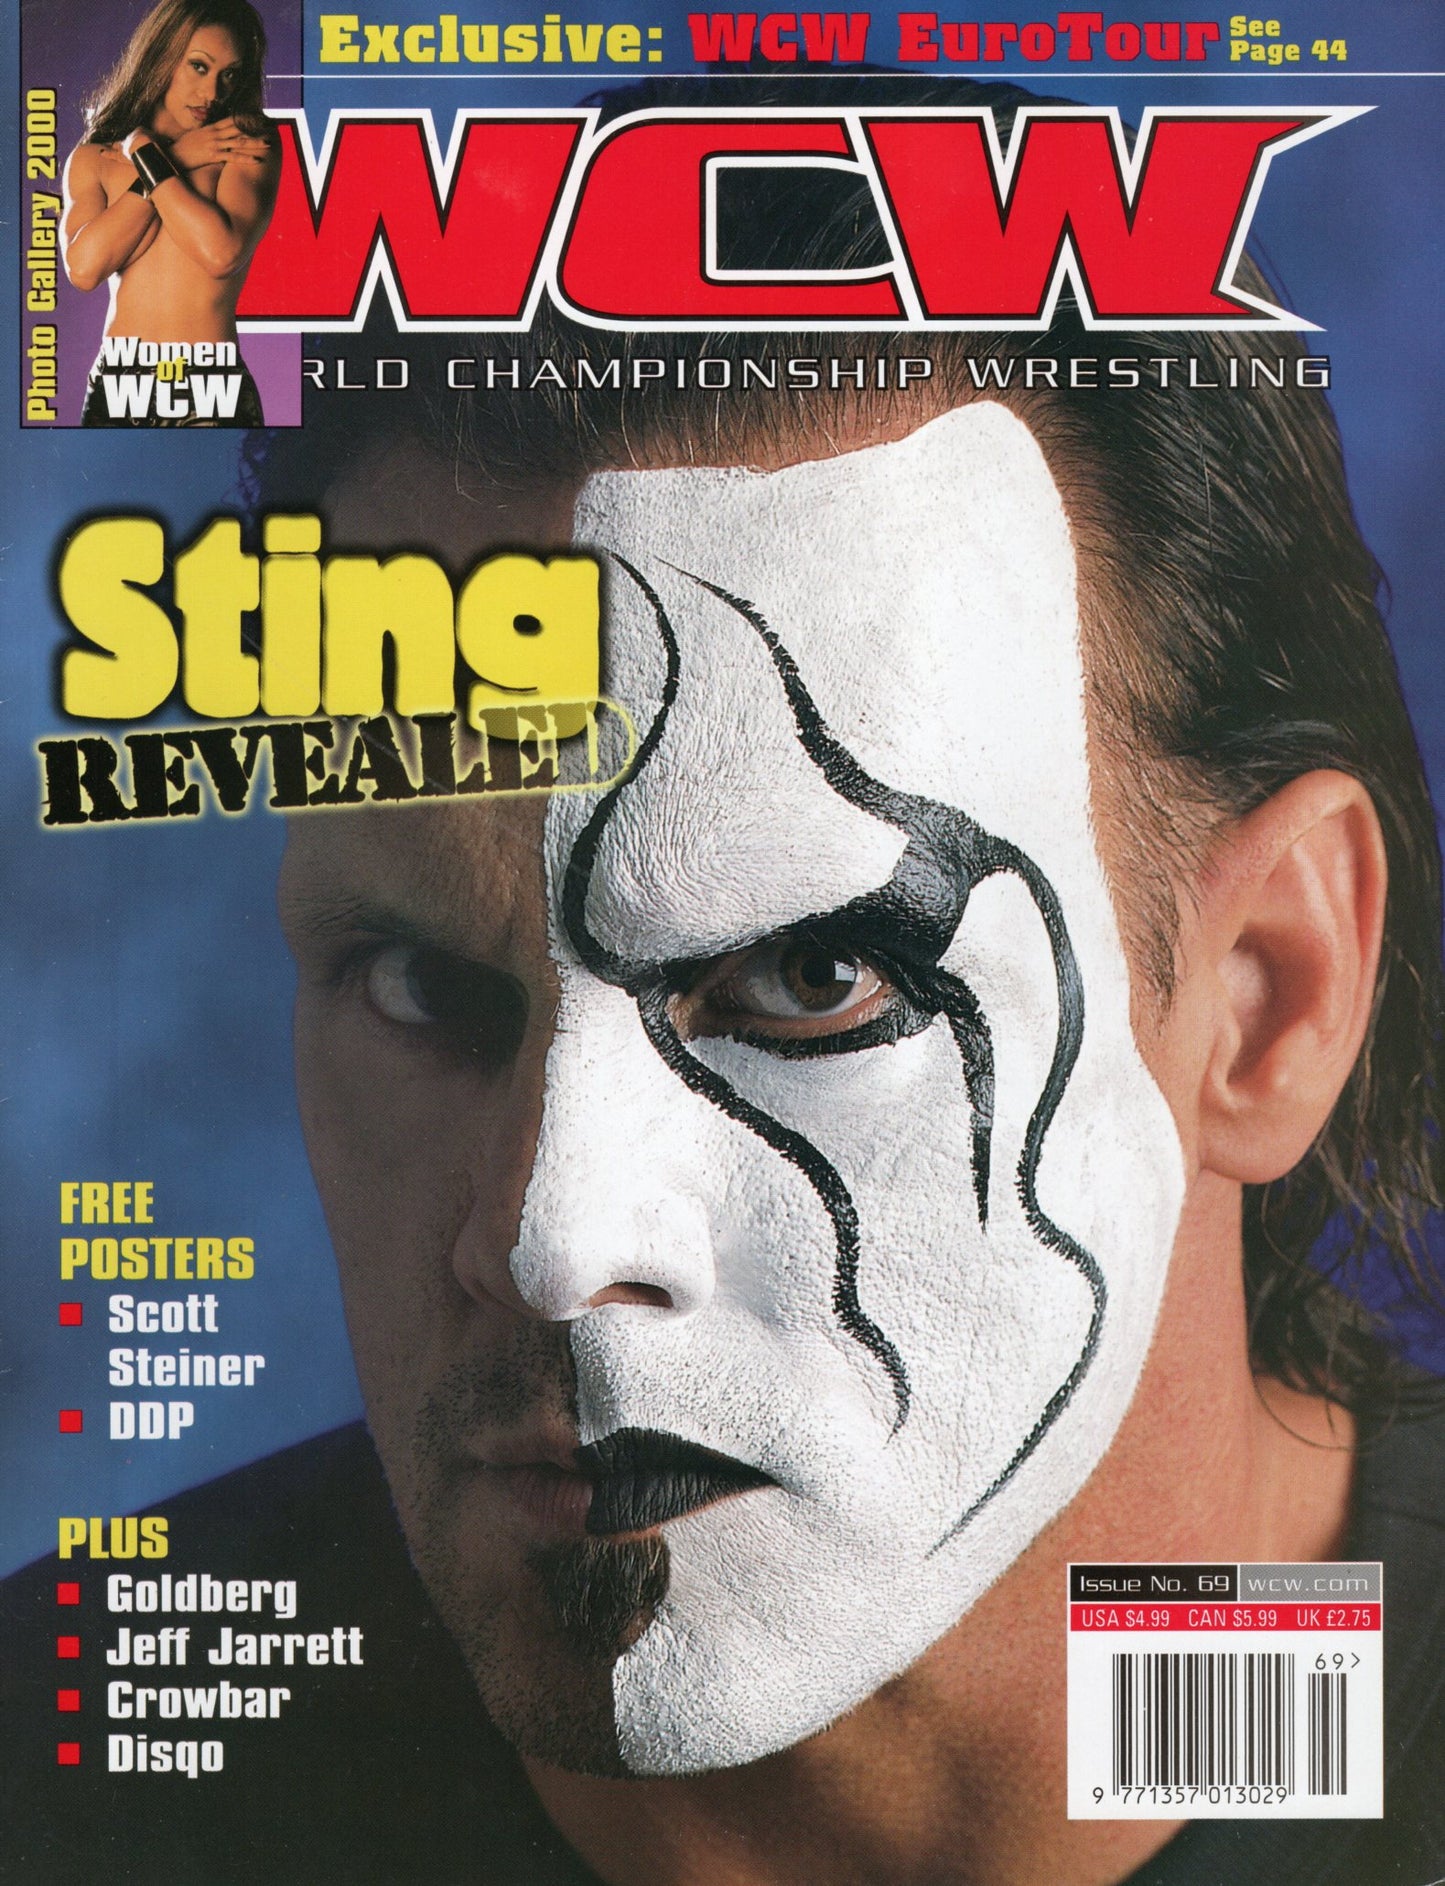 WCW Magazine January 2001 Issue 69